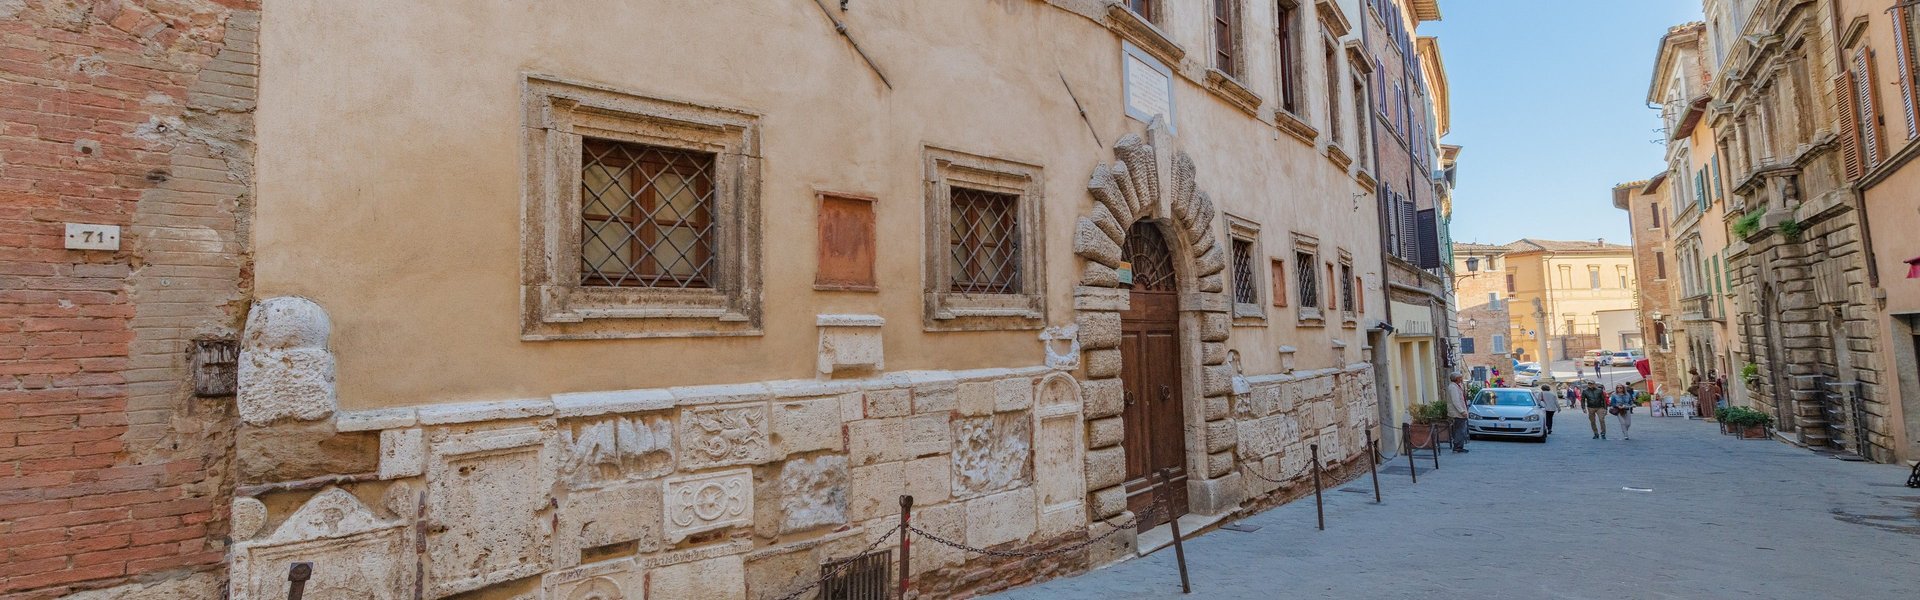 Palazzo Bucelli, Montepulciano